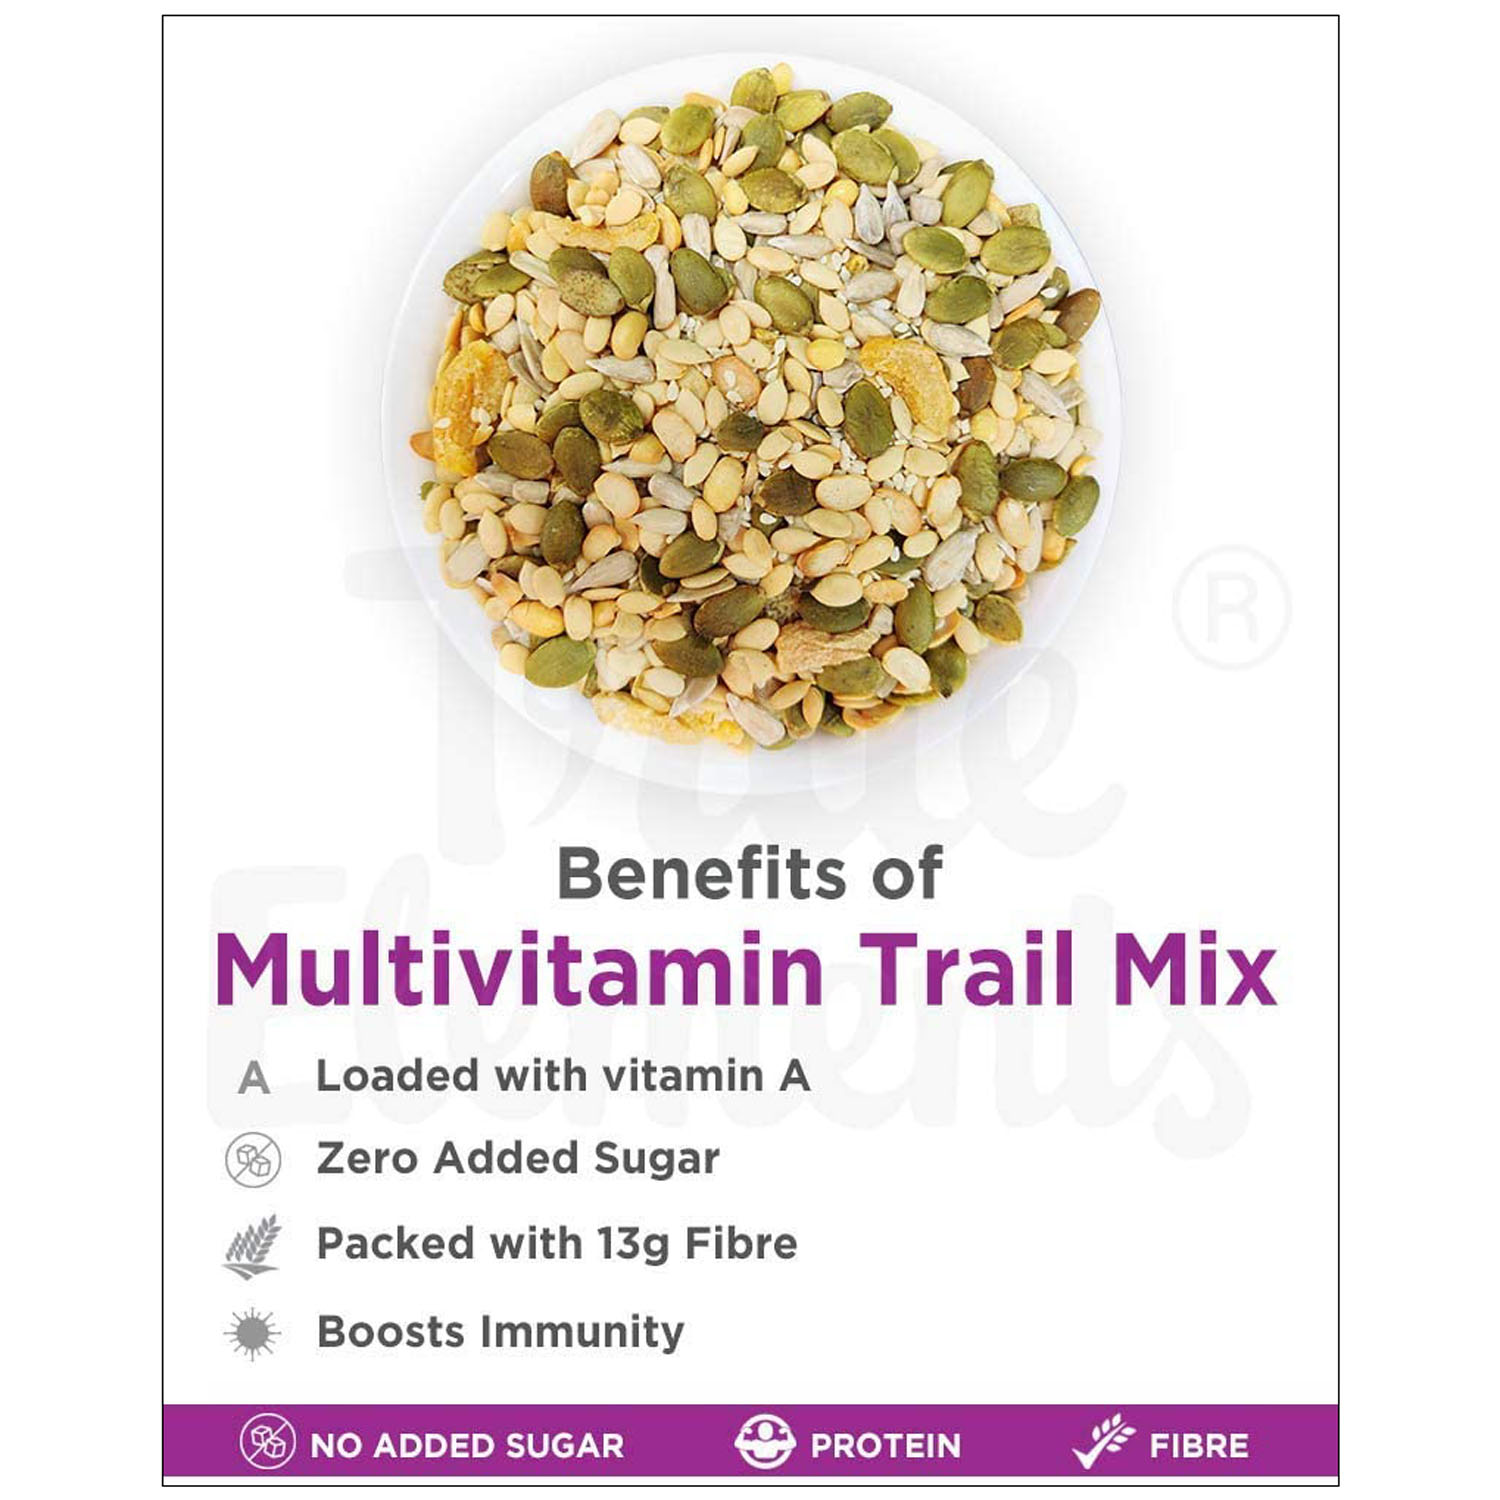 True Elements Multivitamin Trail Mix, 125 gm, Pack of 1 